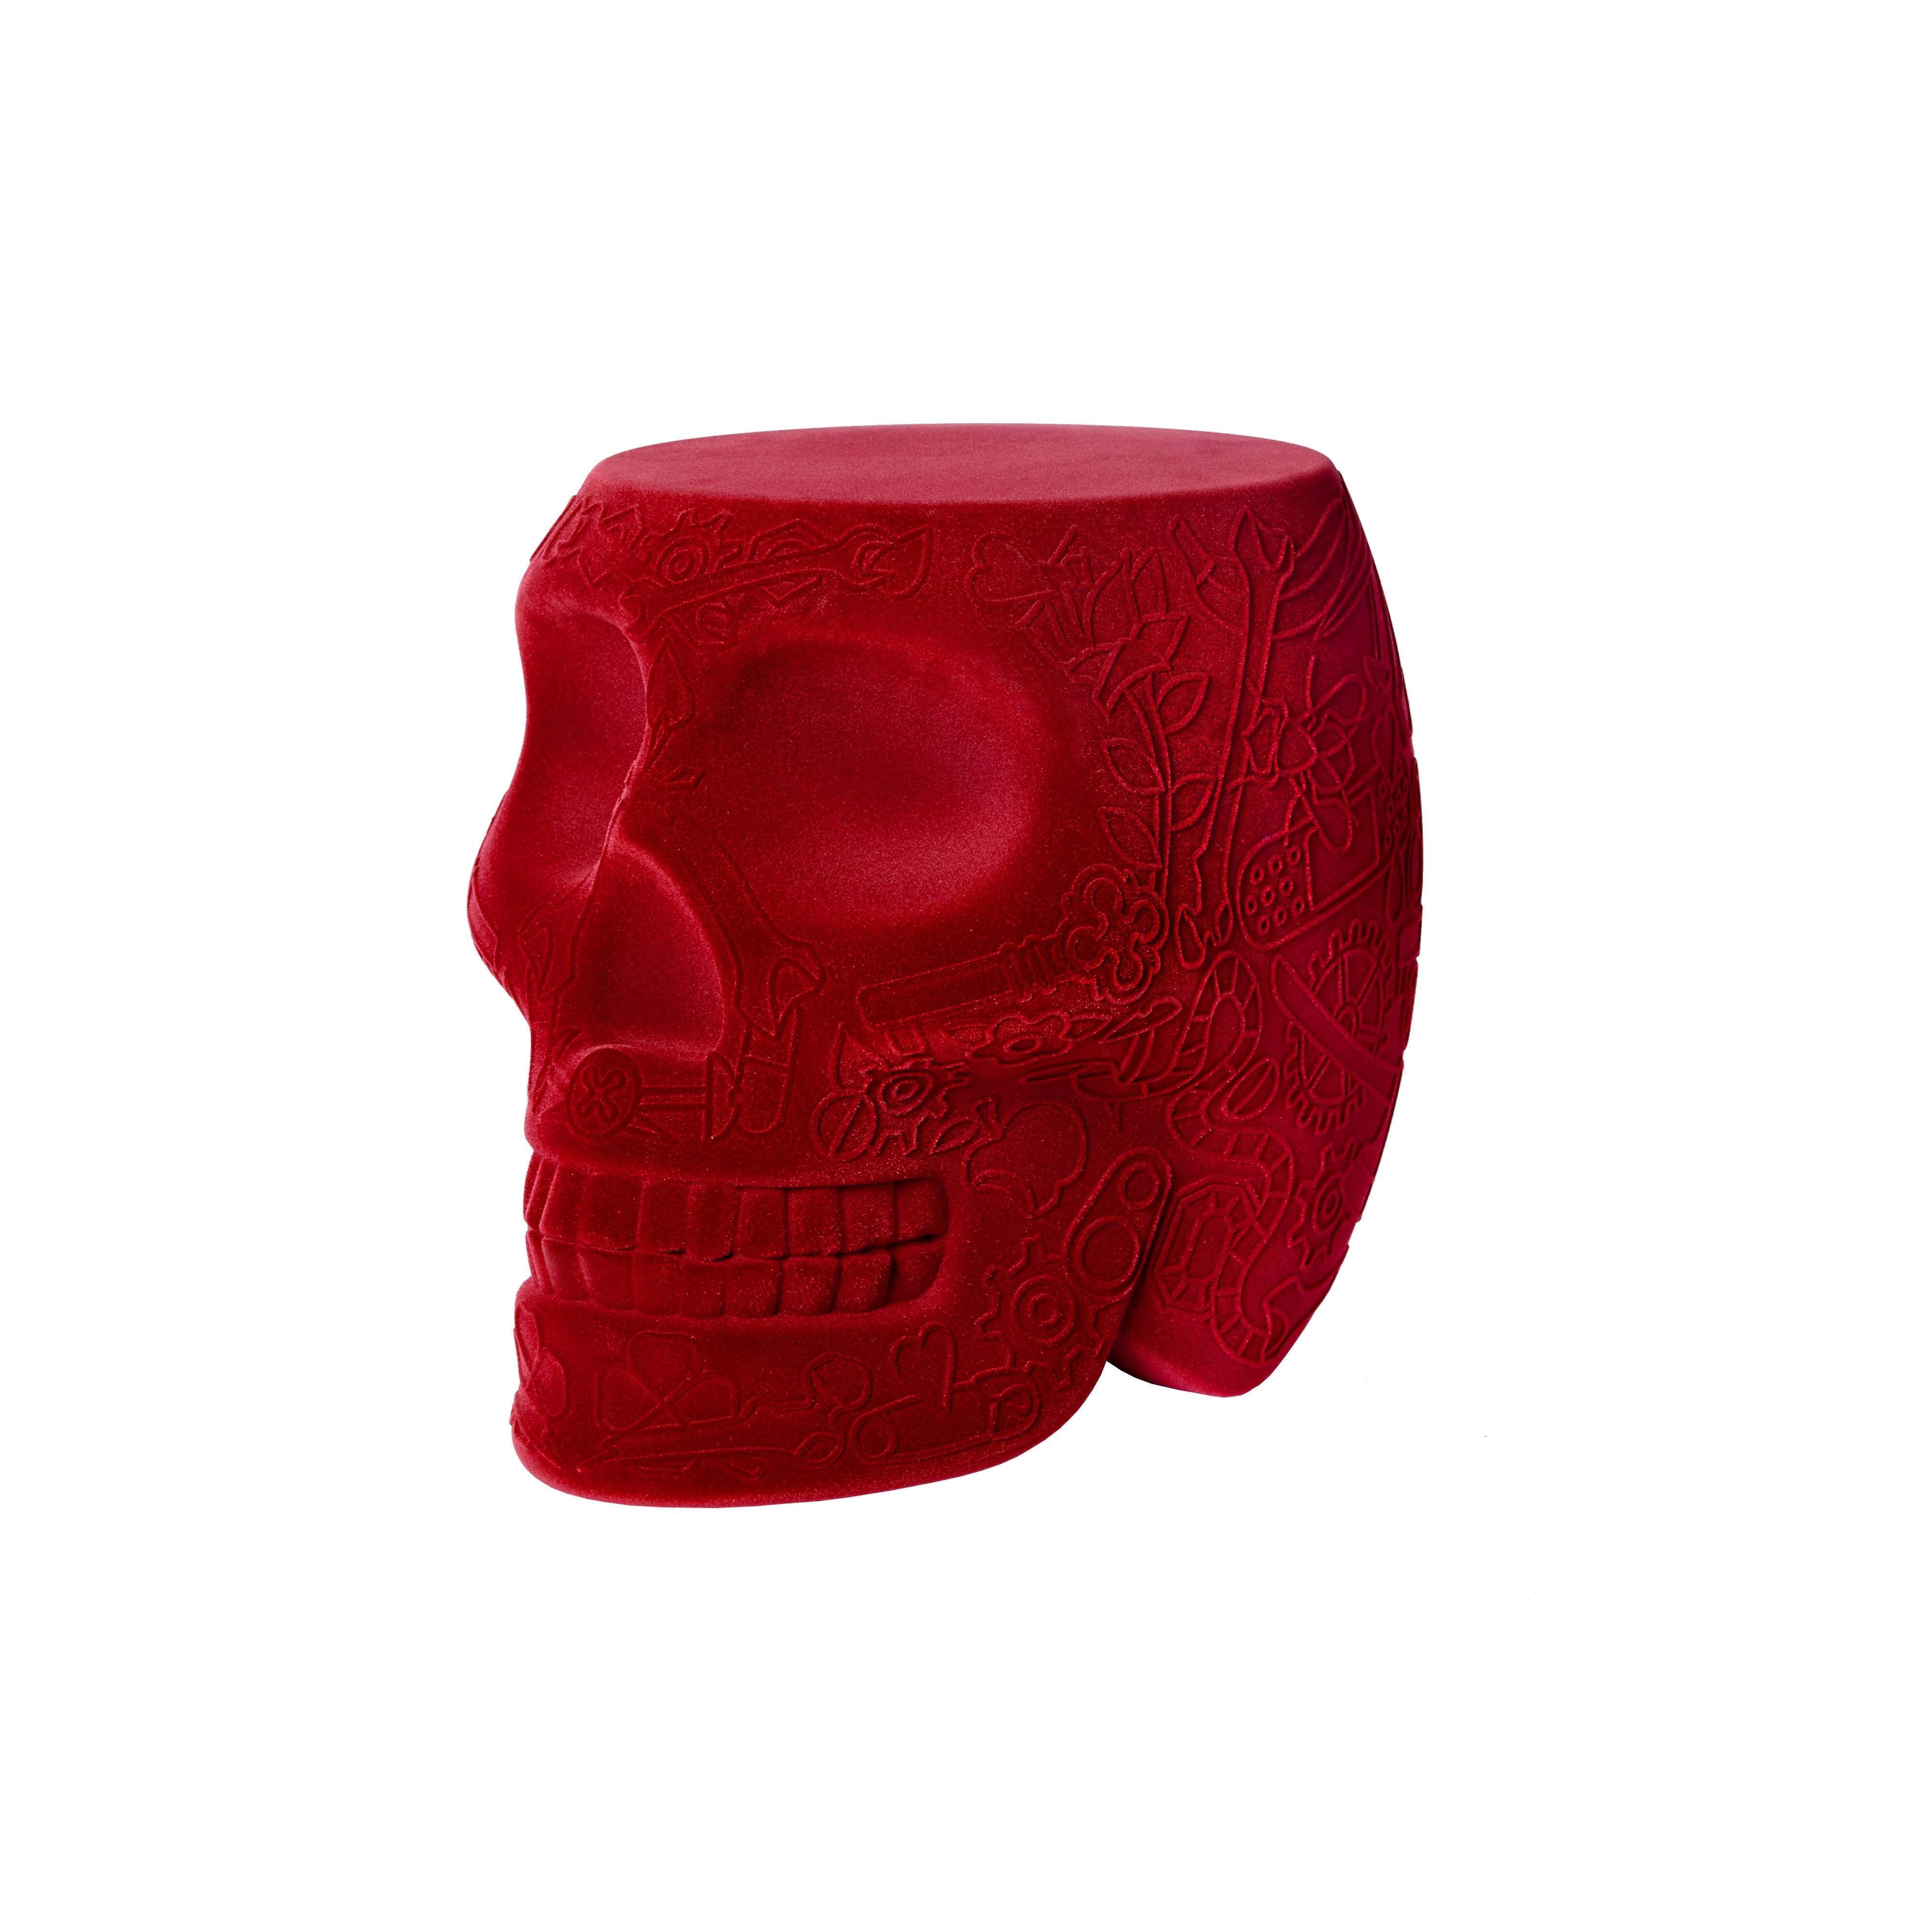 Red Modern Velvet Mexican Calavera Skull Stool or Side Table By Studio Job 2